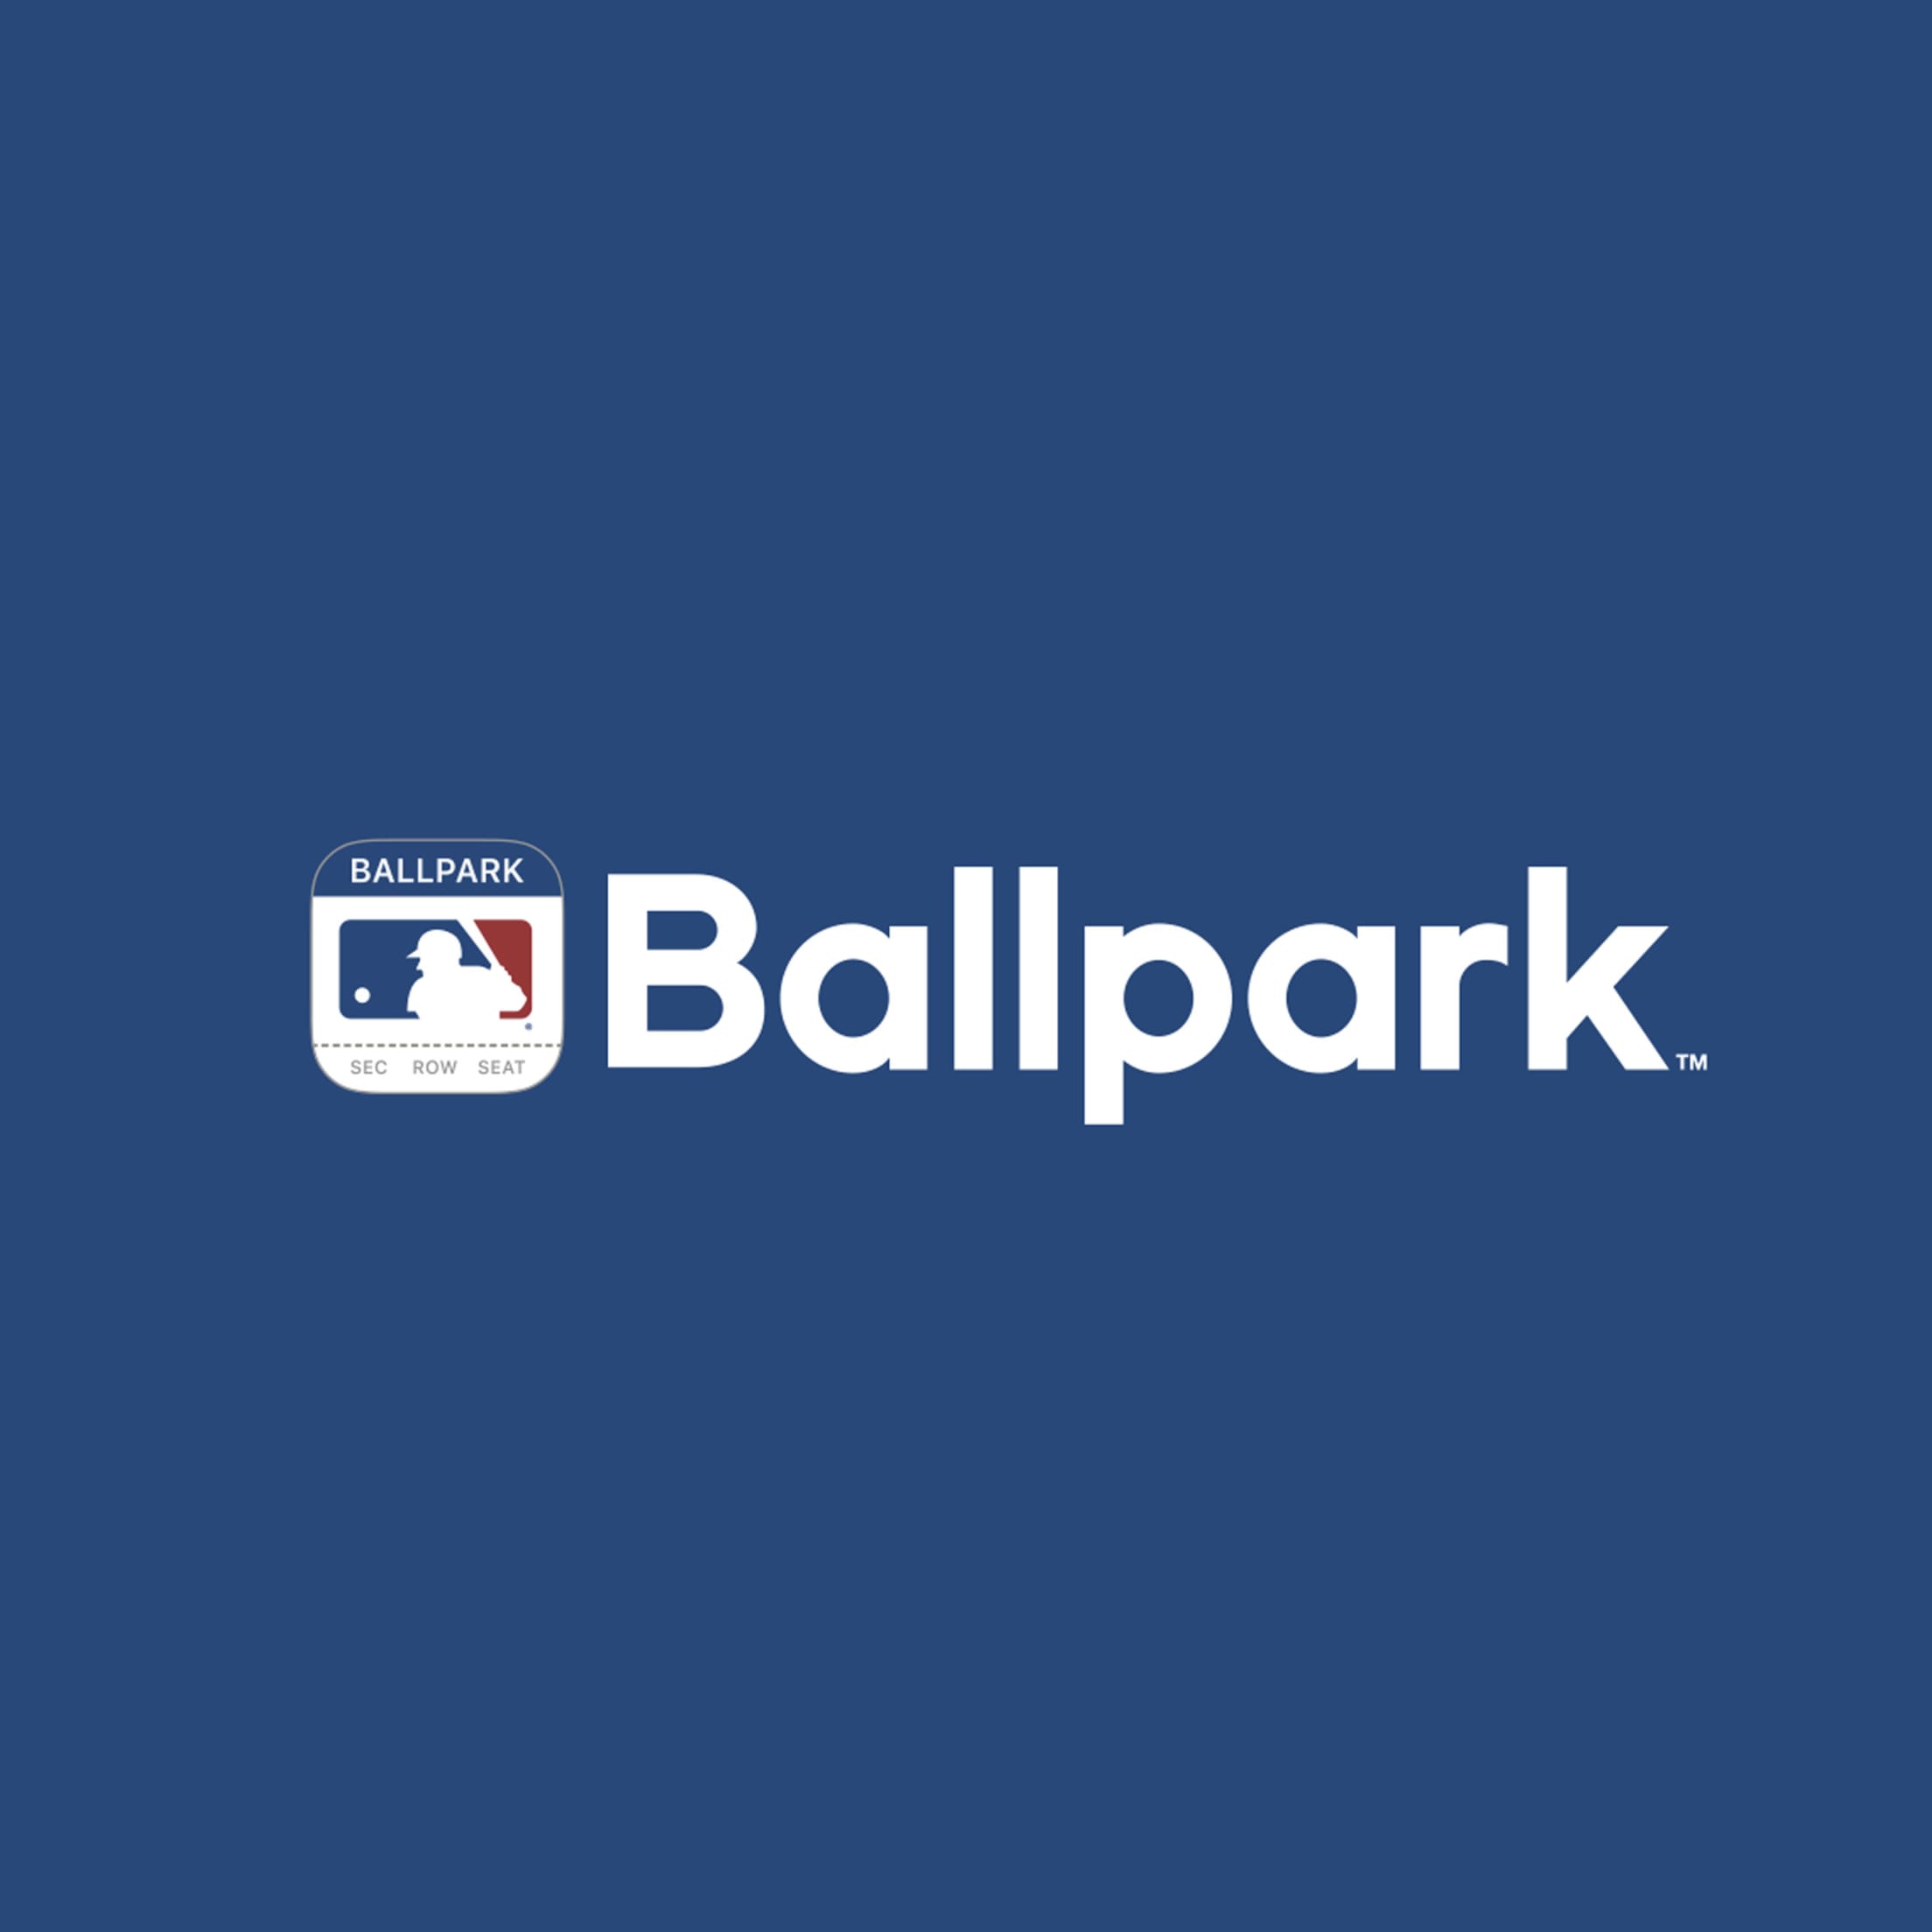 File:Great American Ball Park (20718178689).jpg - Wikipedia